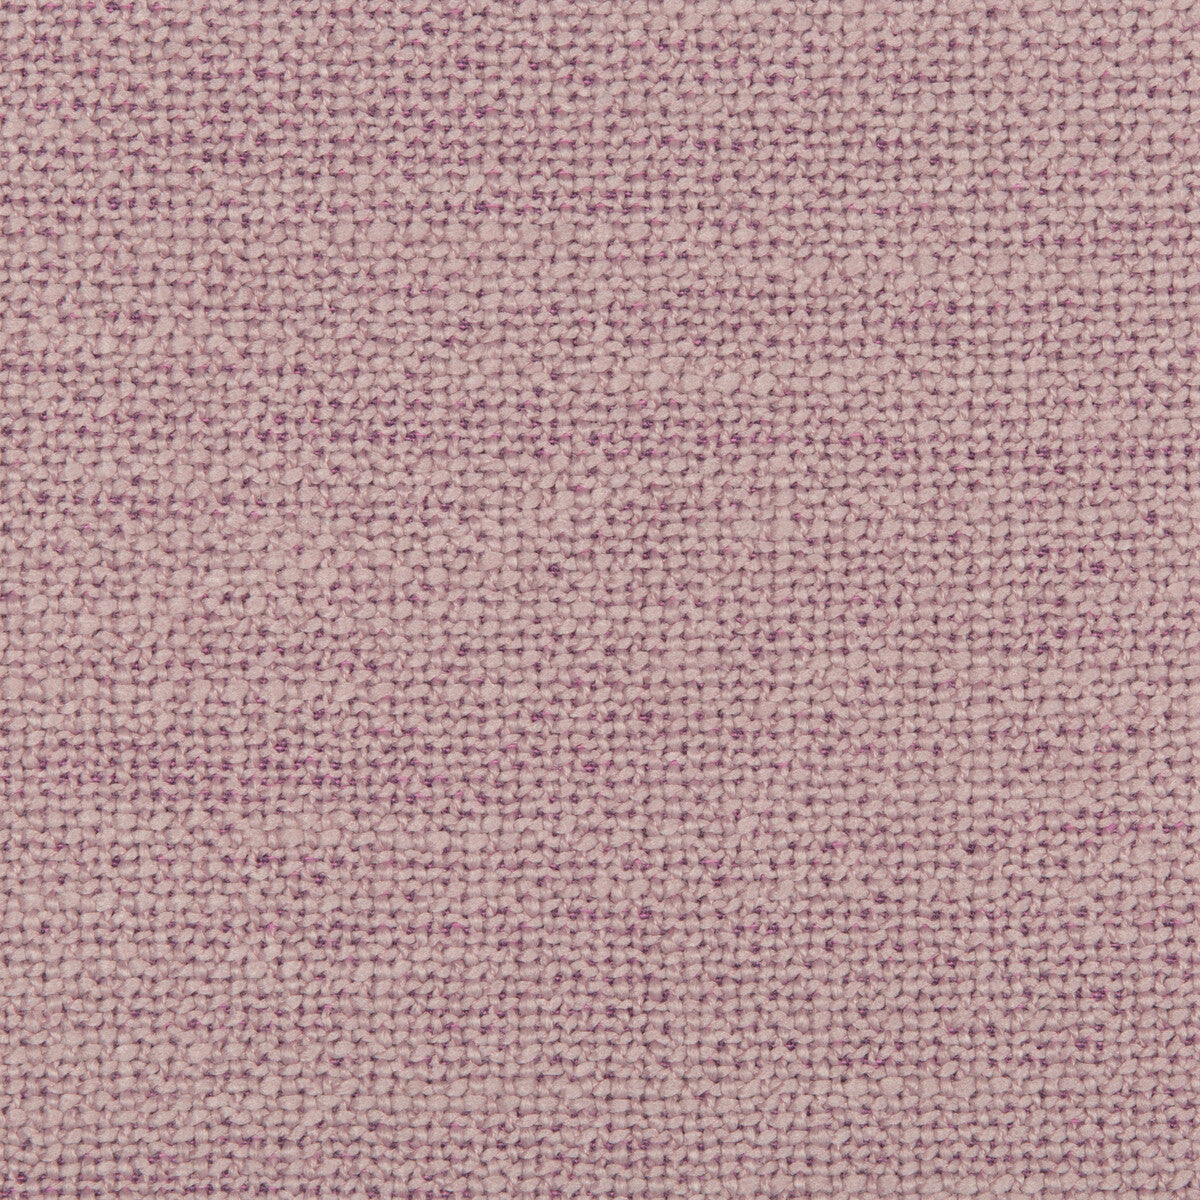 Kravet Smart fabric in 35379-10 color - pattern 35379.10.0 - by Kravet Smart in the Performance Kravetarmor collection